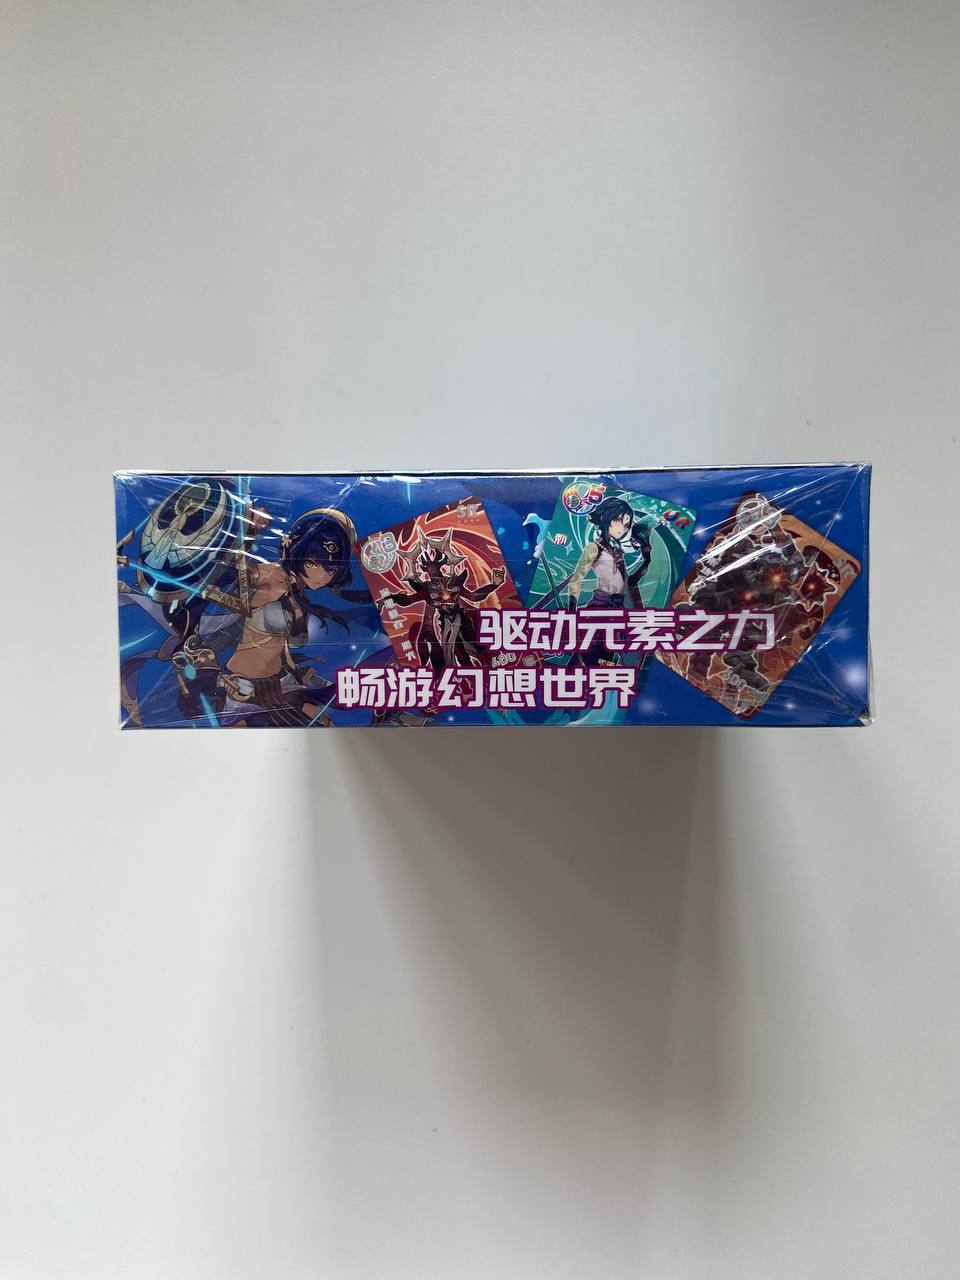 Genshin Impact 2m01 Display Card Box Sealed